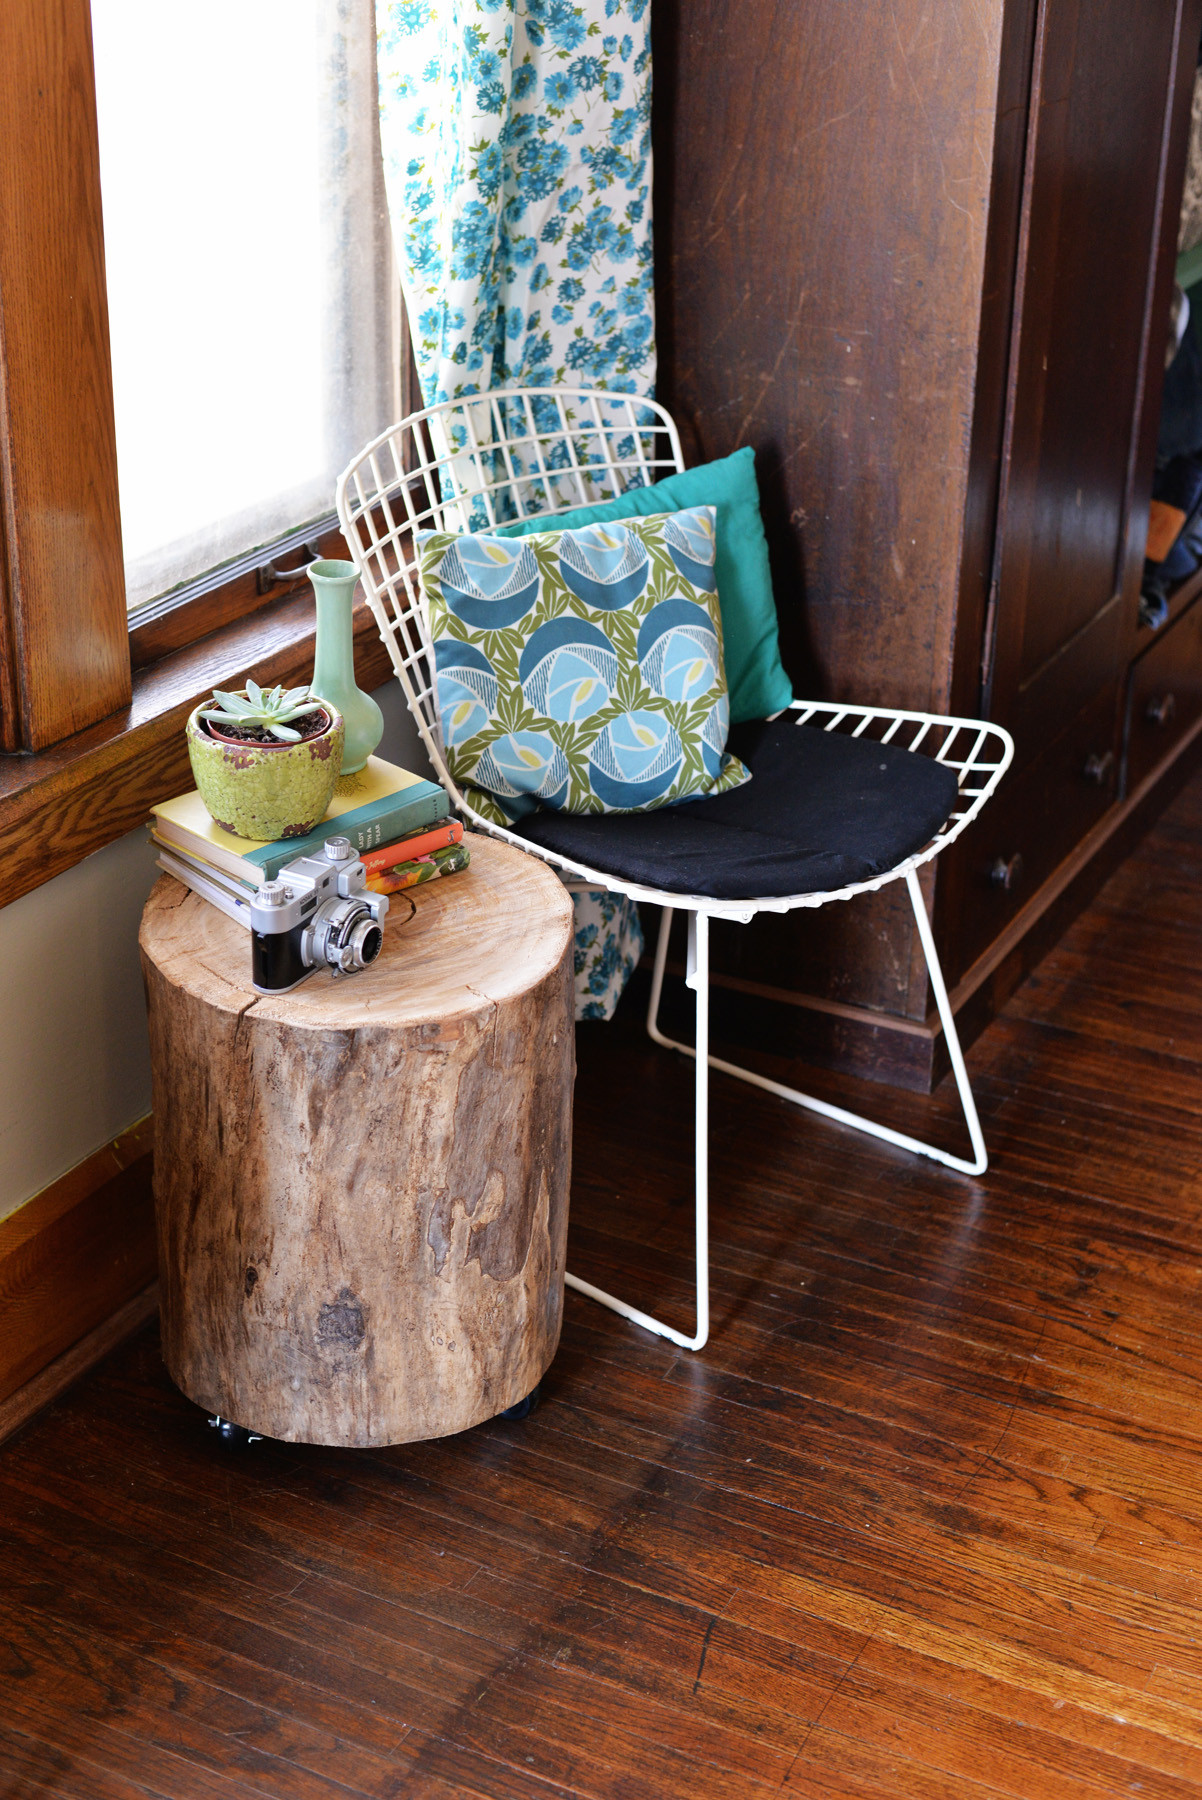 Best ideas about Tree Stump Side Table DIY
. Save or Pin DIY Tree Stump Side Table Now.